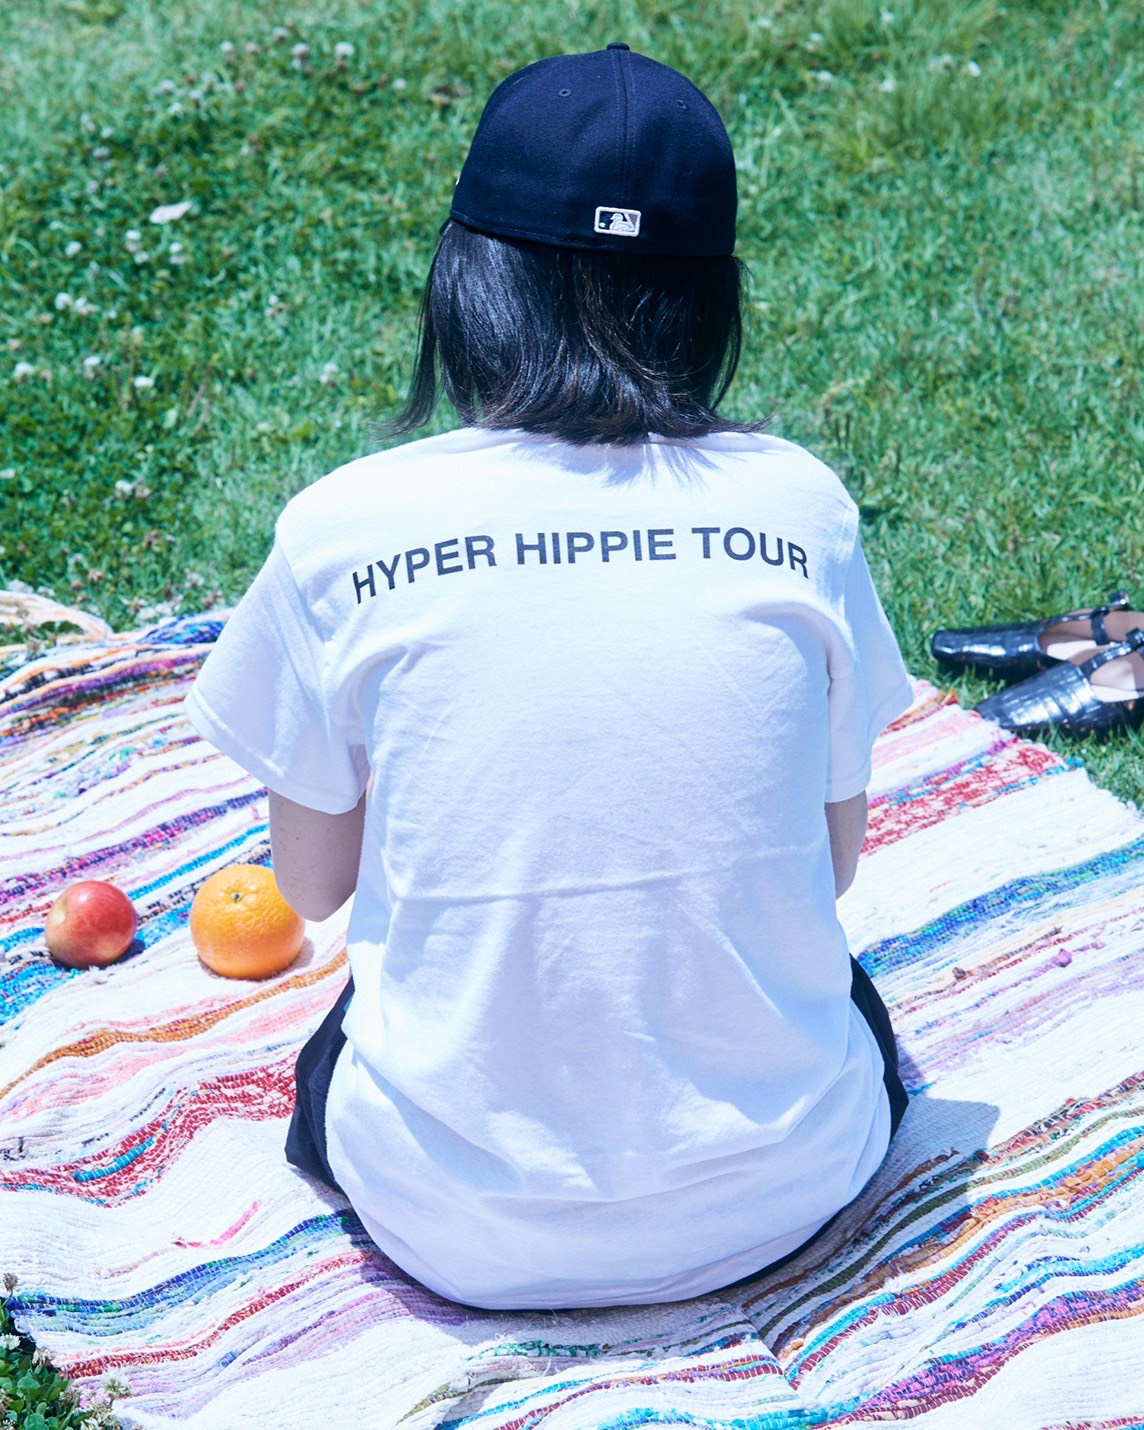 kZmが開催した『HYPER HIPPIE TOUR』のマーチャンダイズが